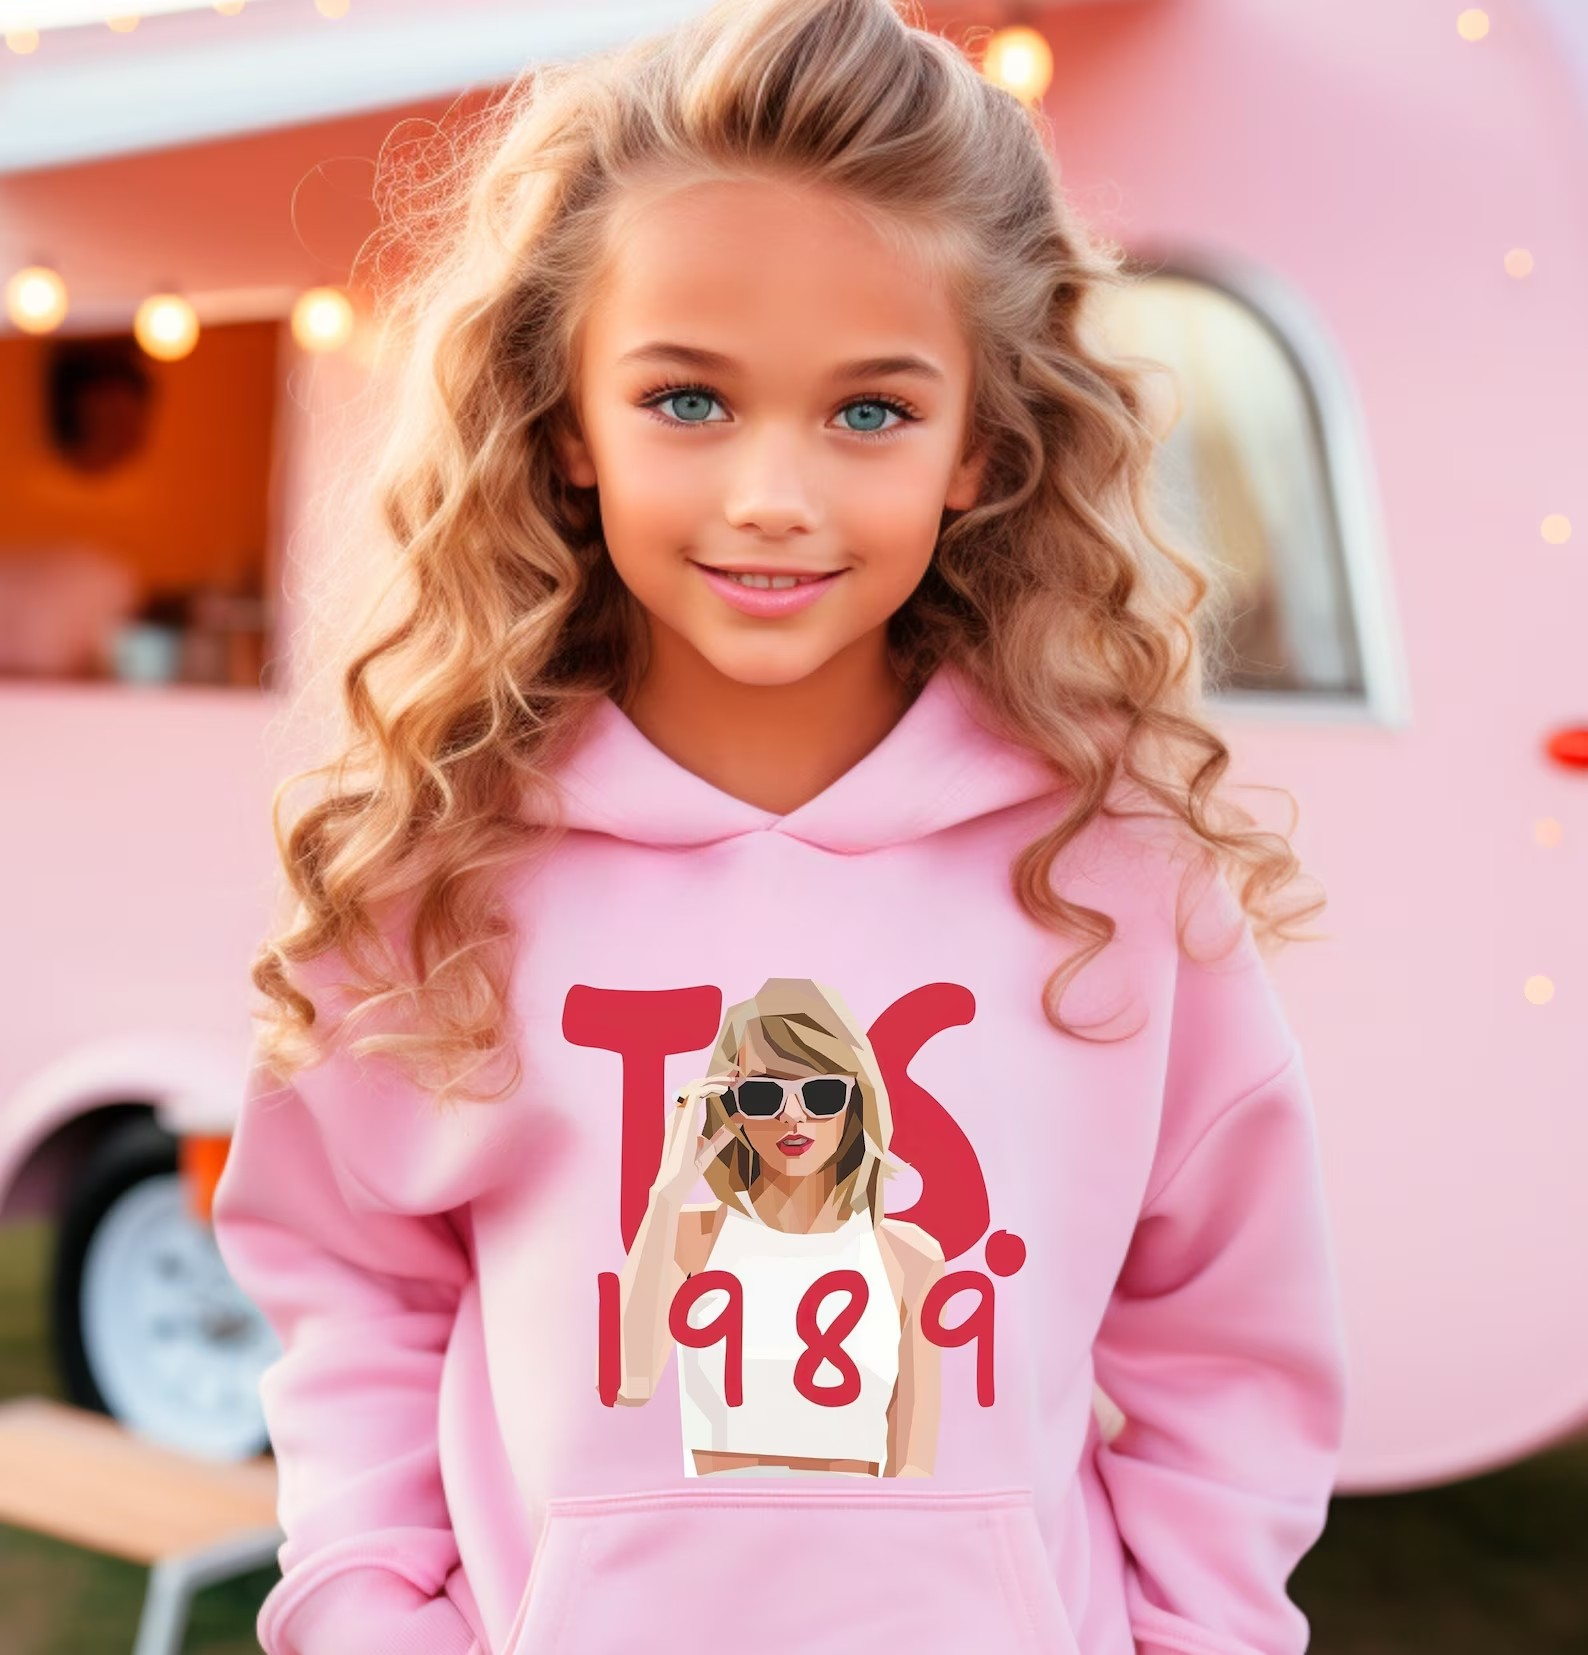 GT0436 baby girl clothes girl 1989 singer print girl hoodies shirt toddler hoodies top